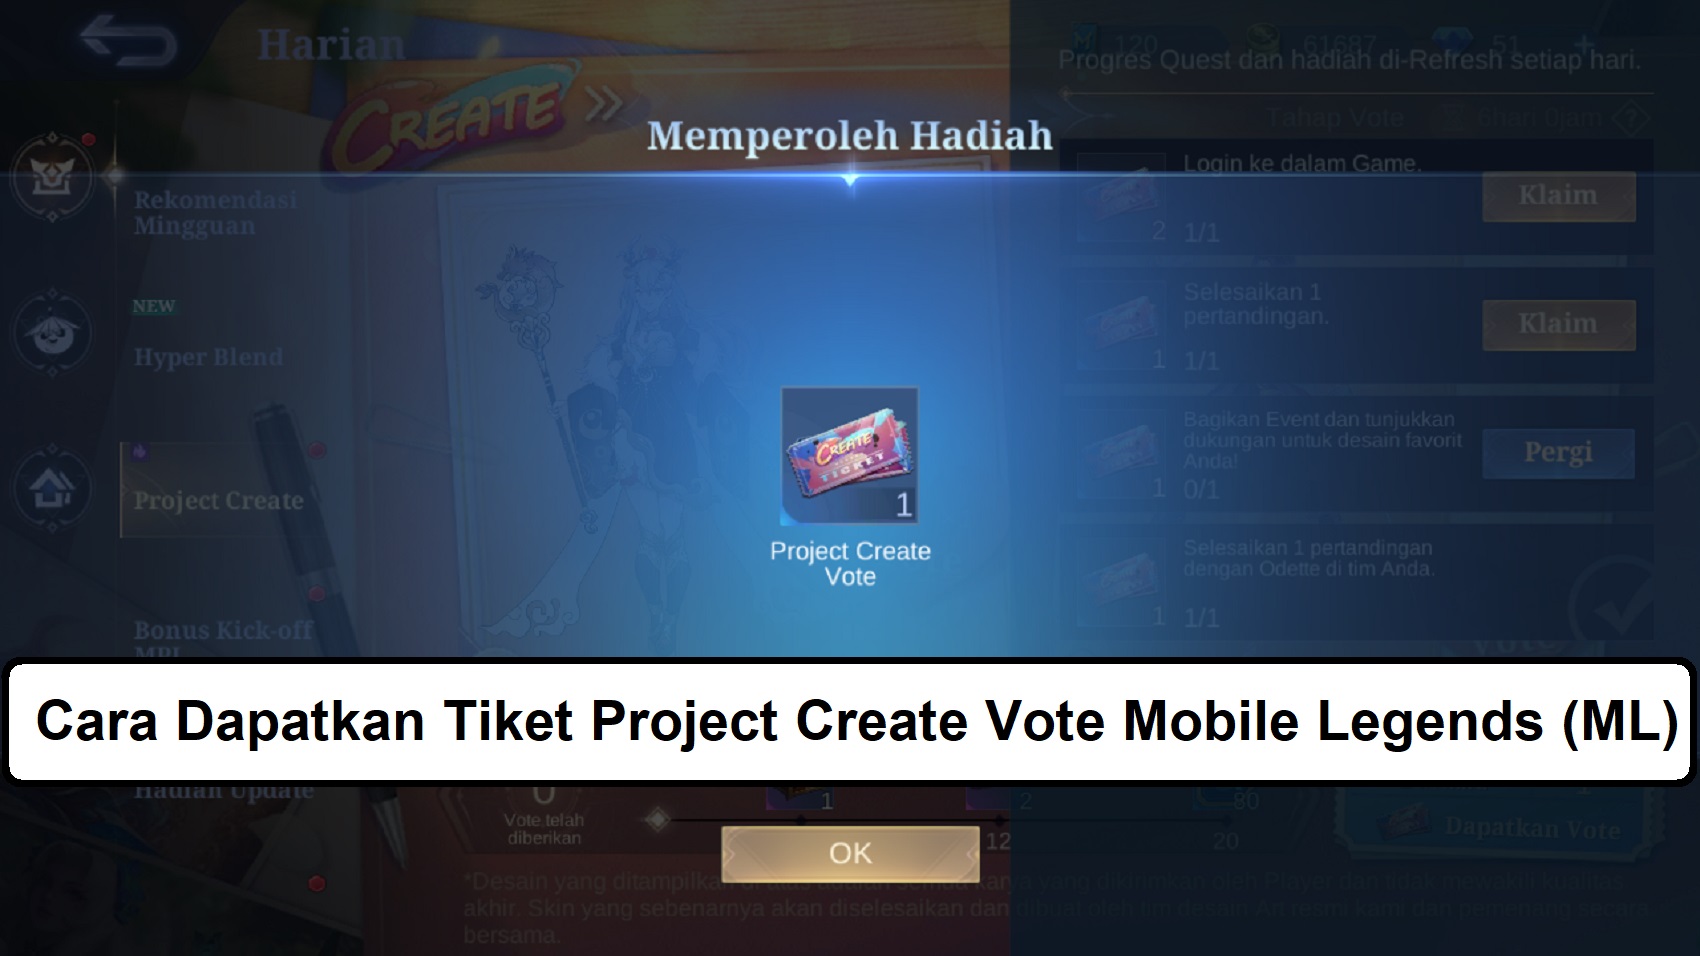 Cara Dapatkan Tiket Project Create Vote Mobile Legends (ML)